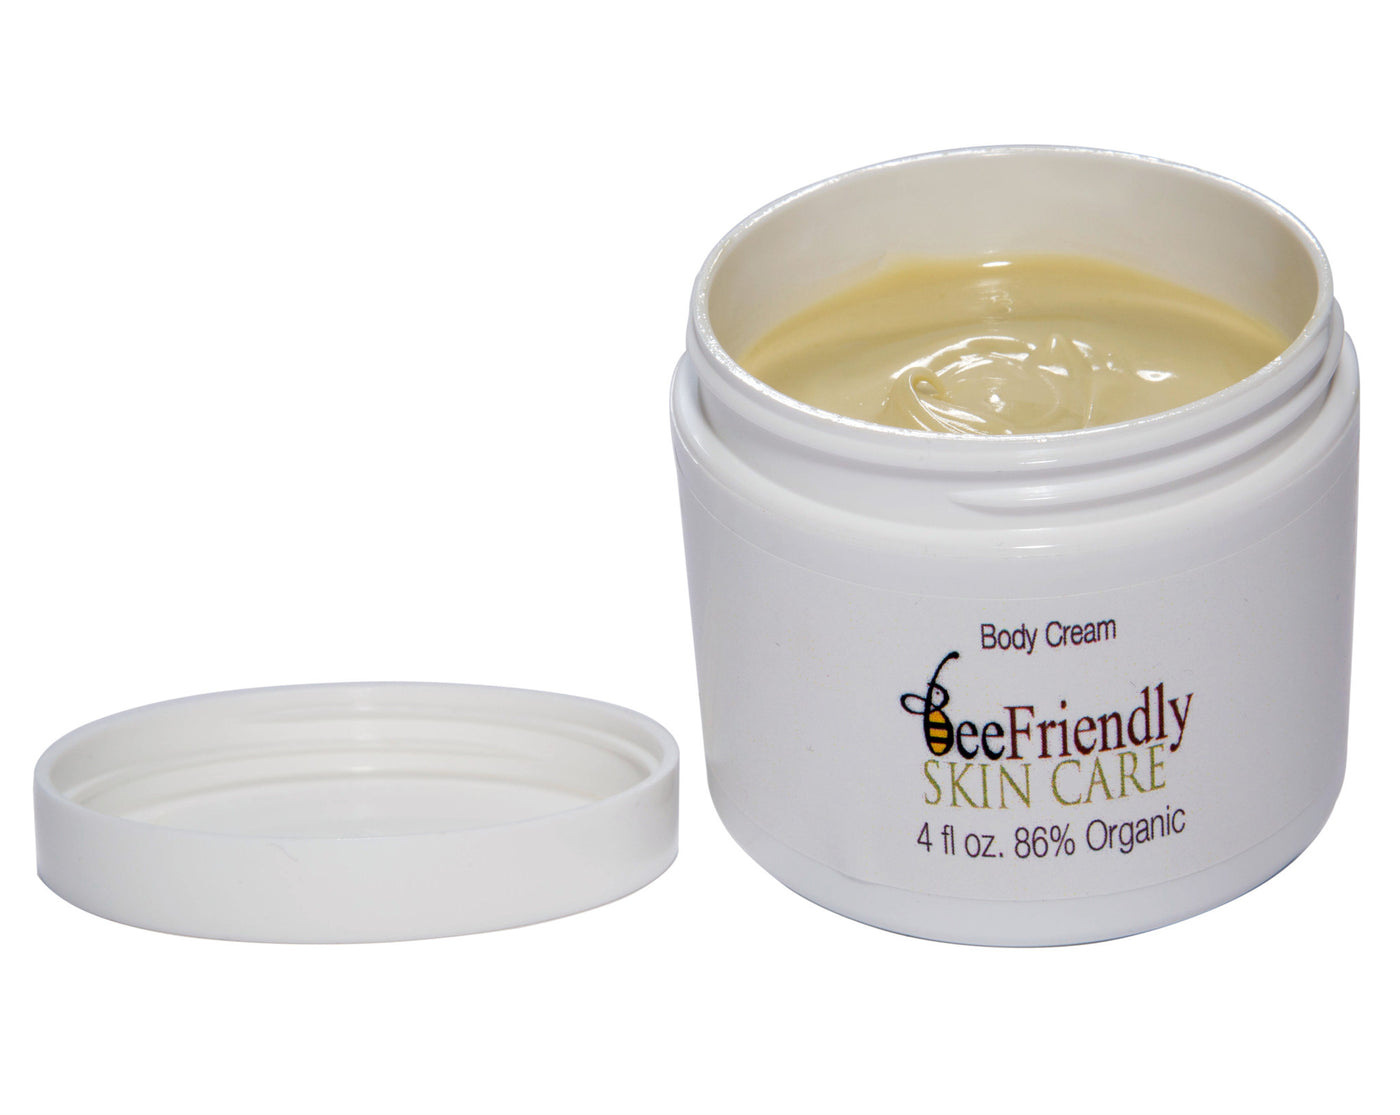 Organic Body Cream - Best Moisturizer For Dry Skin